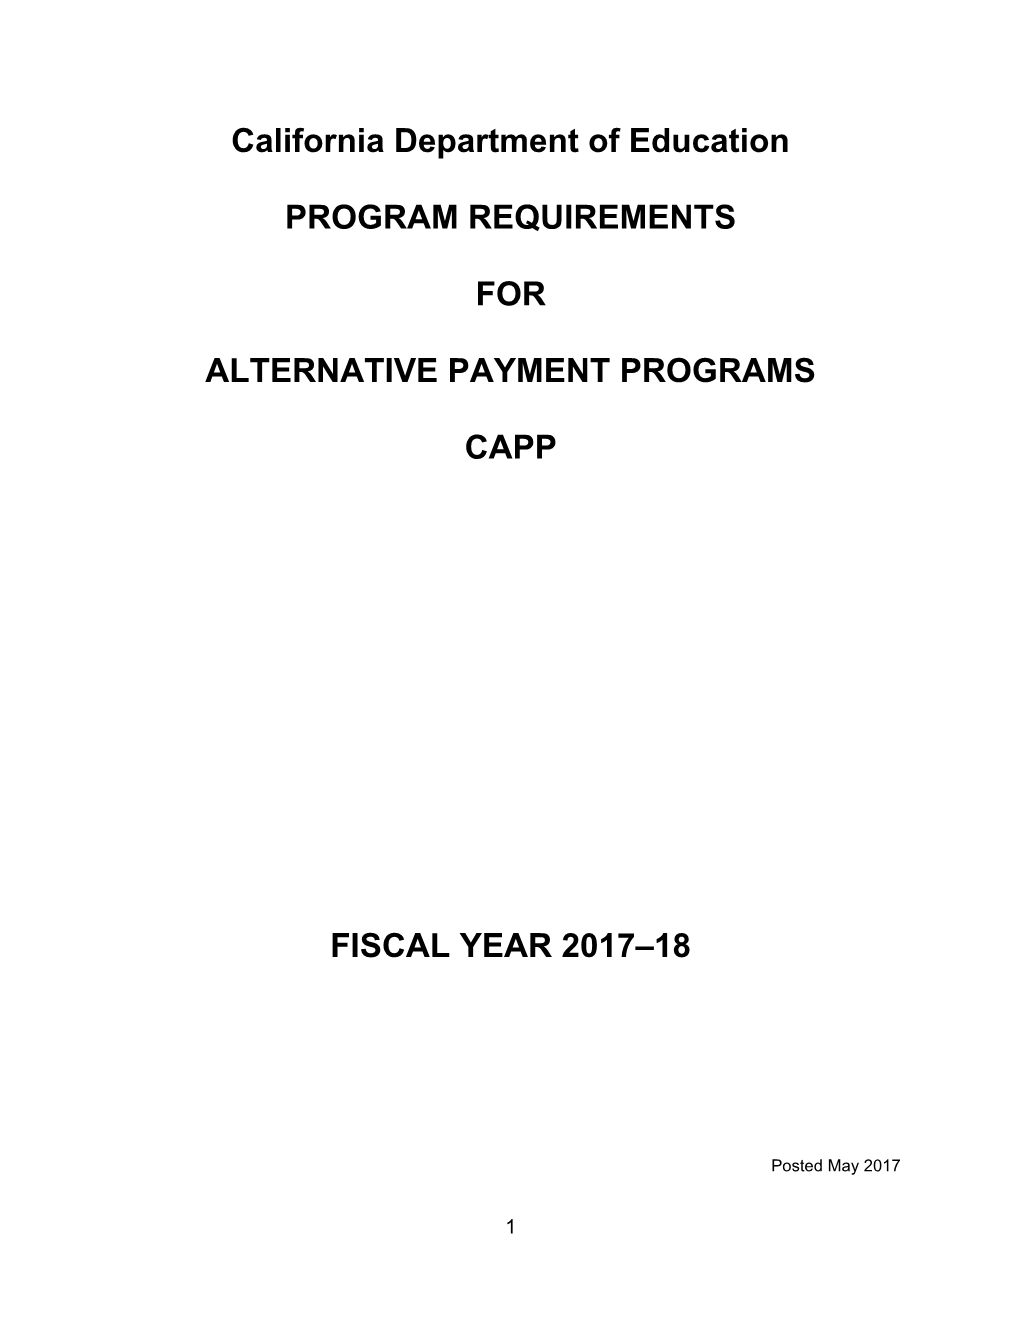 2017-18 CAPP Alternative Payment Program - Child Development (CA Dept of Education)